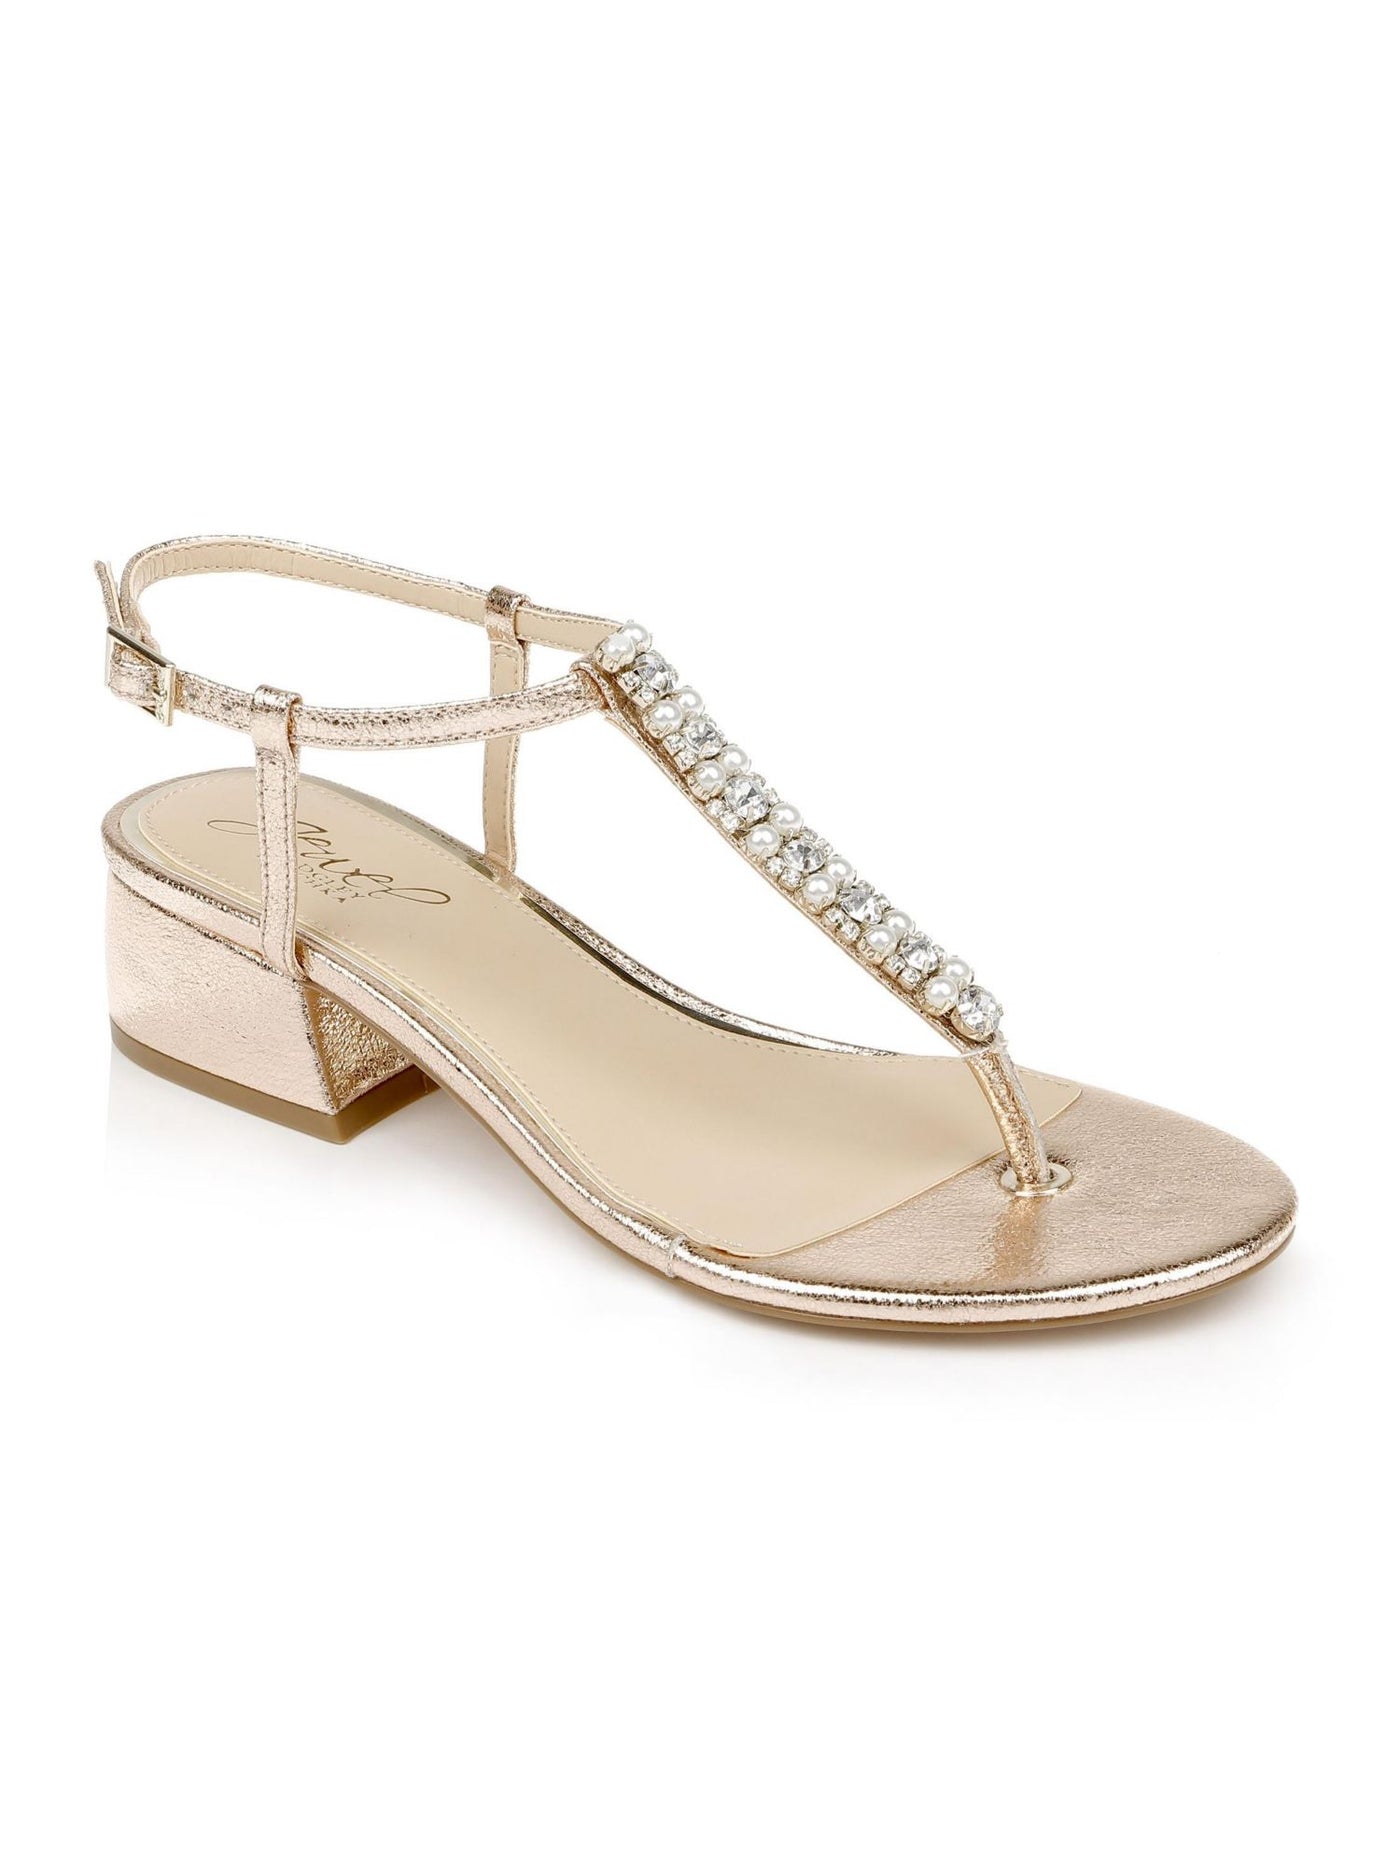 JEWEL BADGLEY MISCHKA Womens Gold Embellished T-Strap Dasha Round Toe Block Heel Buckle Dress Thong Sandals Shoes 7 M